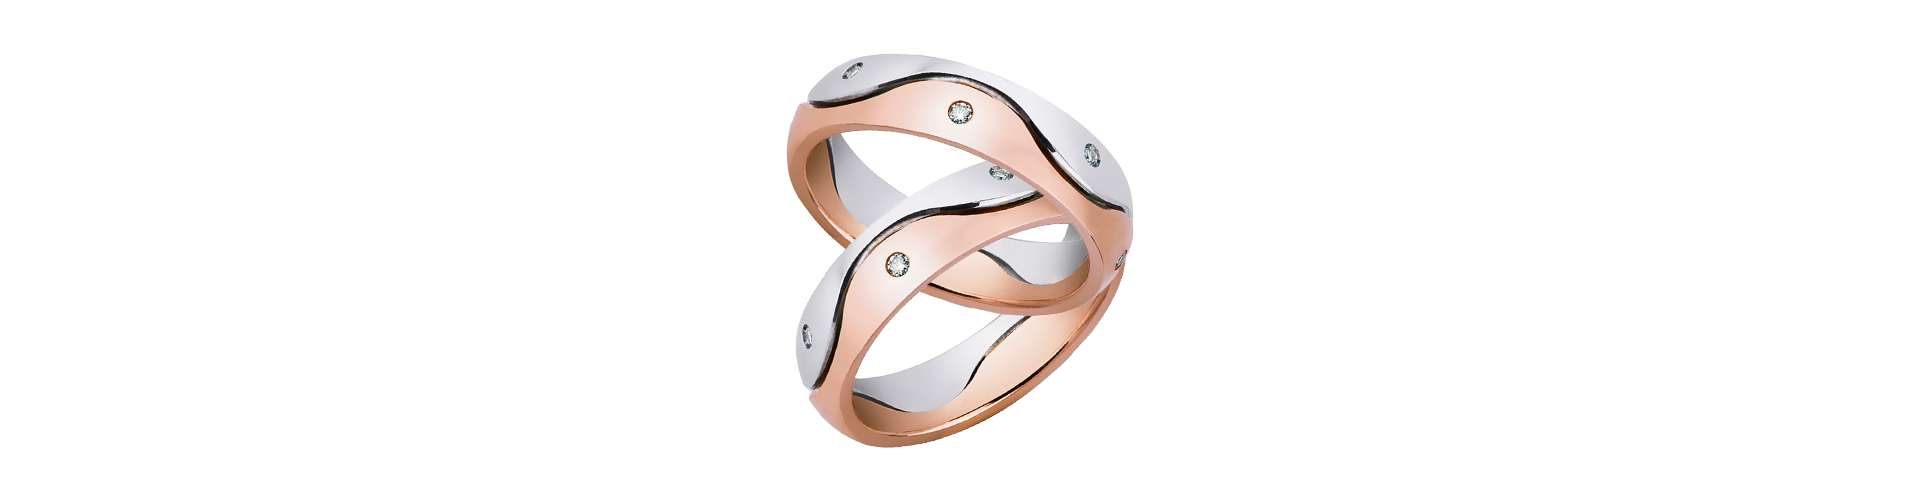 9.0 Wedding rings in gold 18k | GV